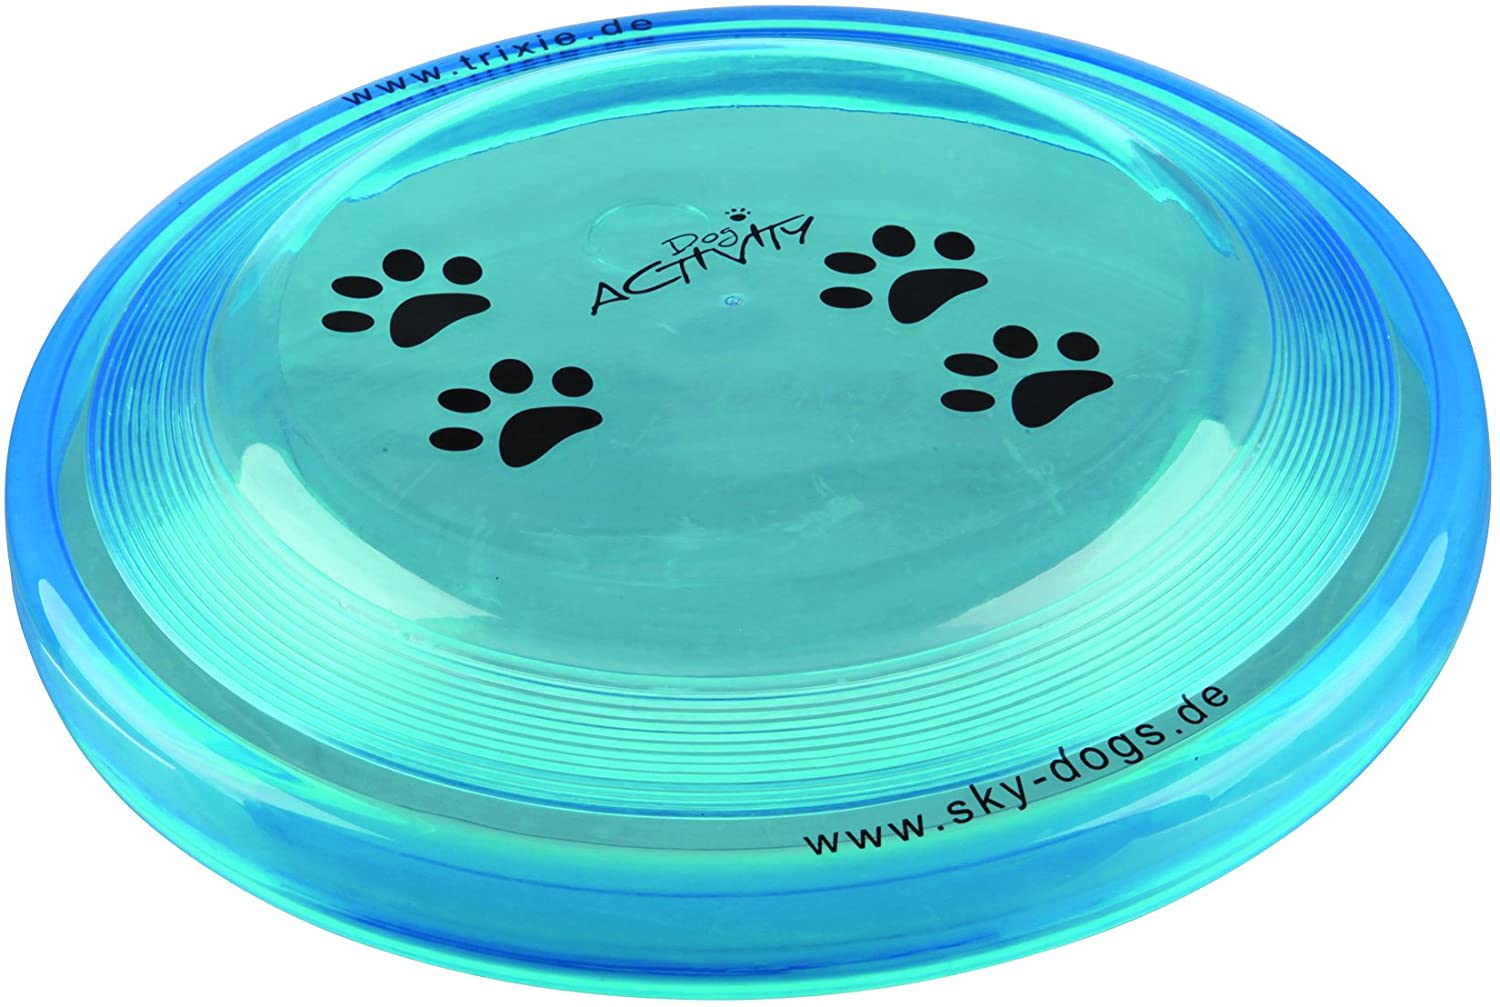  Trixie Disc Dog Activity, Plást. Extra Resistente,ø23 cm 